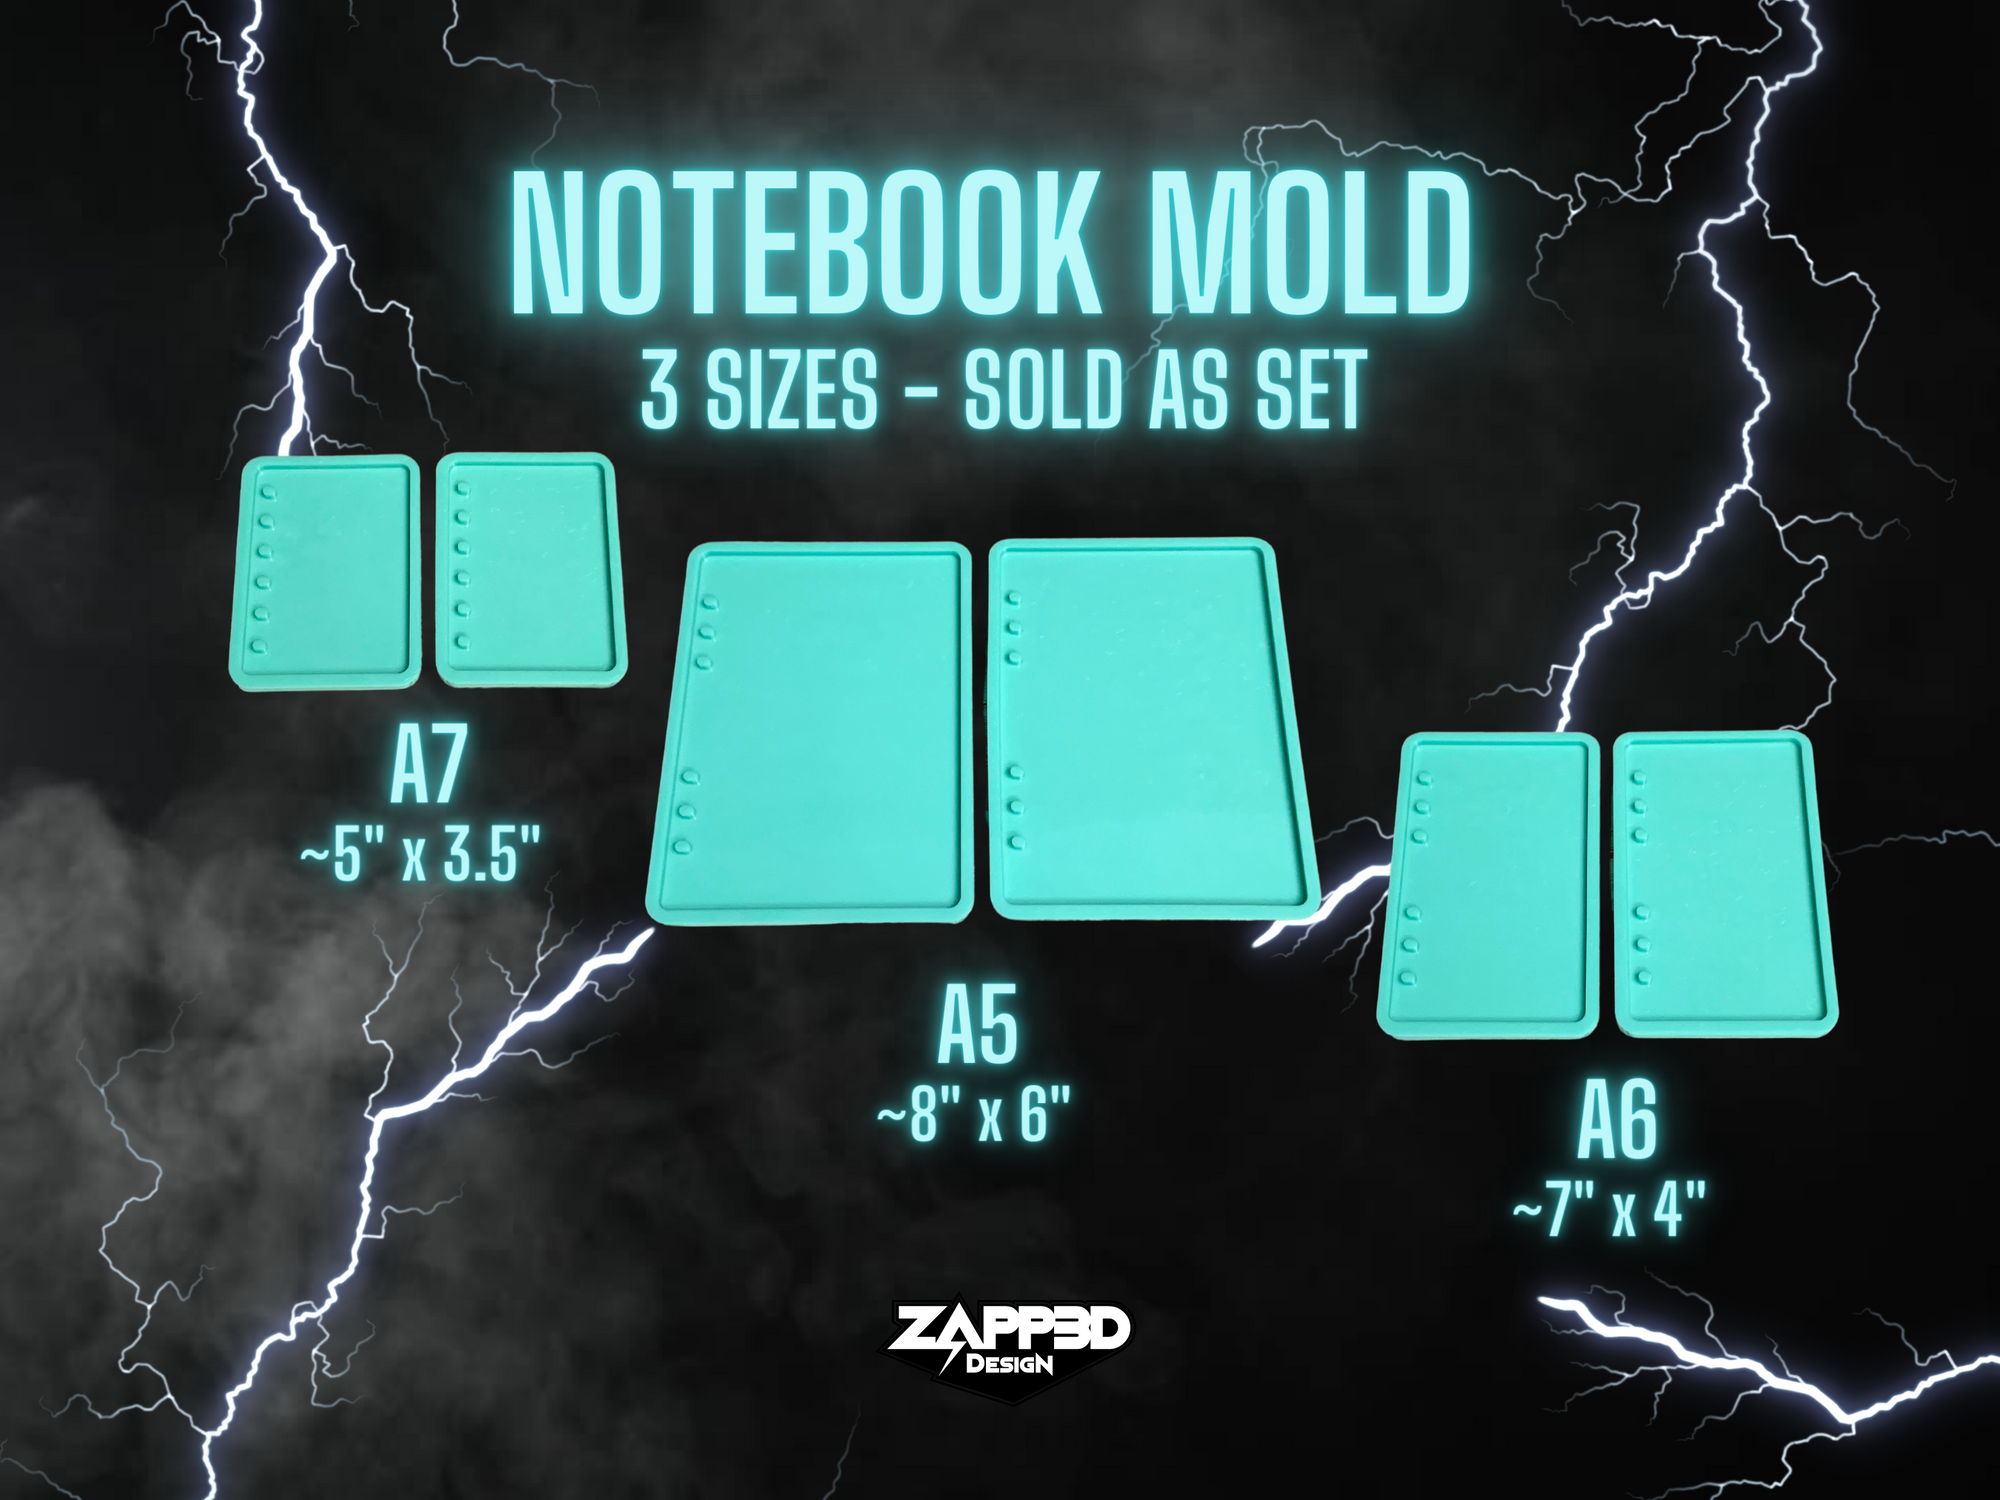 Notebook Mold | 3 Sizes, A5, A6, A7 | Notebook Resin Mold, Resin Notebook Mold, Resin Binder Molds, Journal Mold